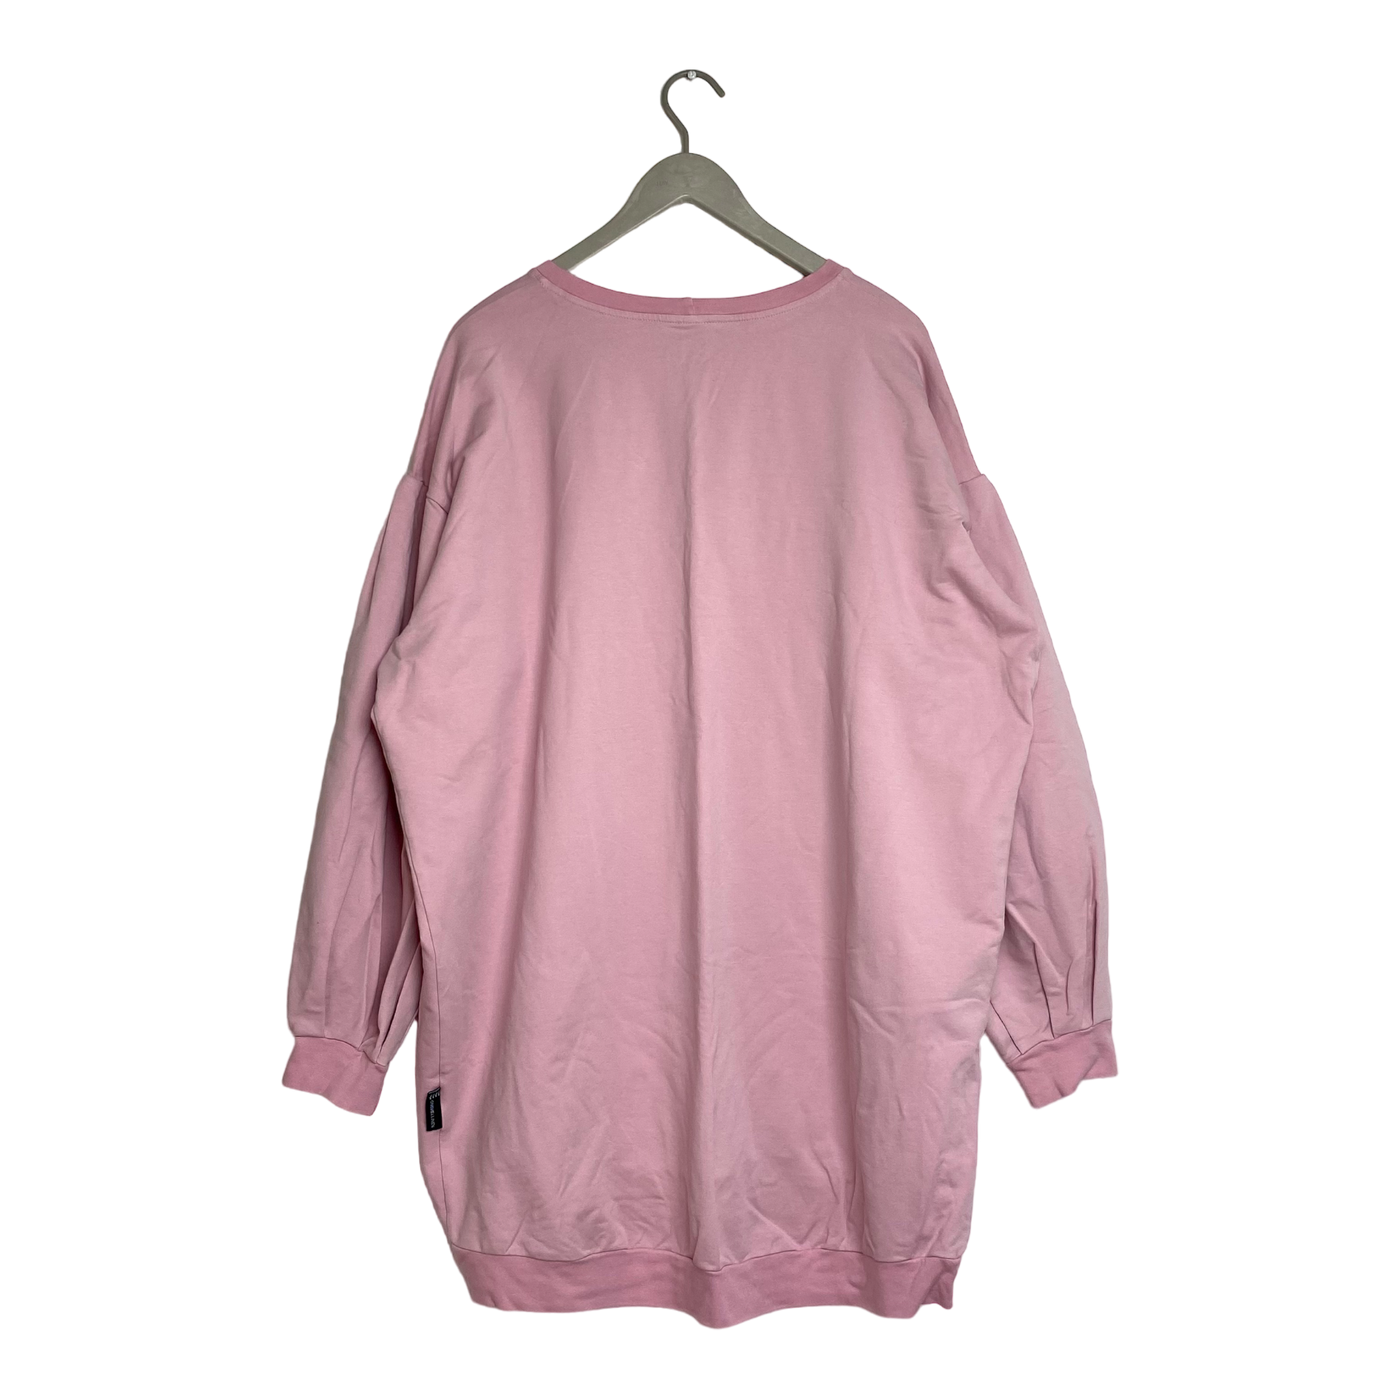 Ommellinen giant sweatshirt, pink | woman XL/XXL